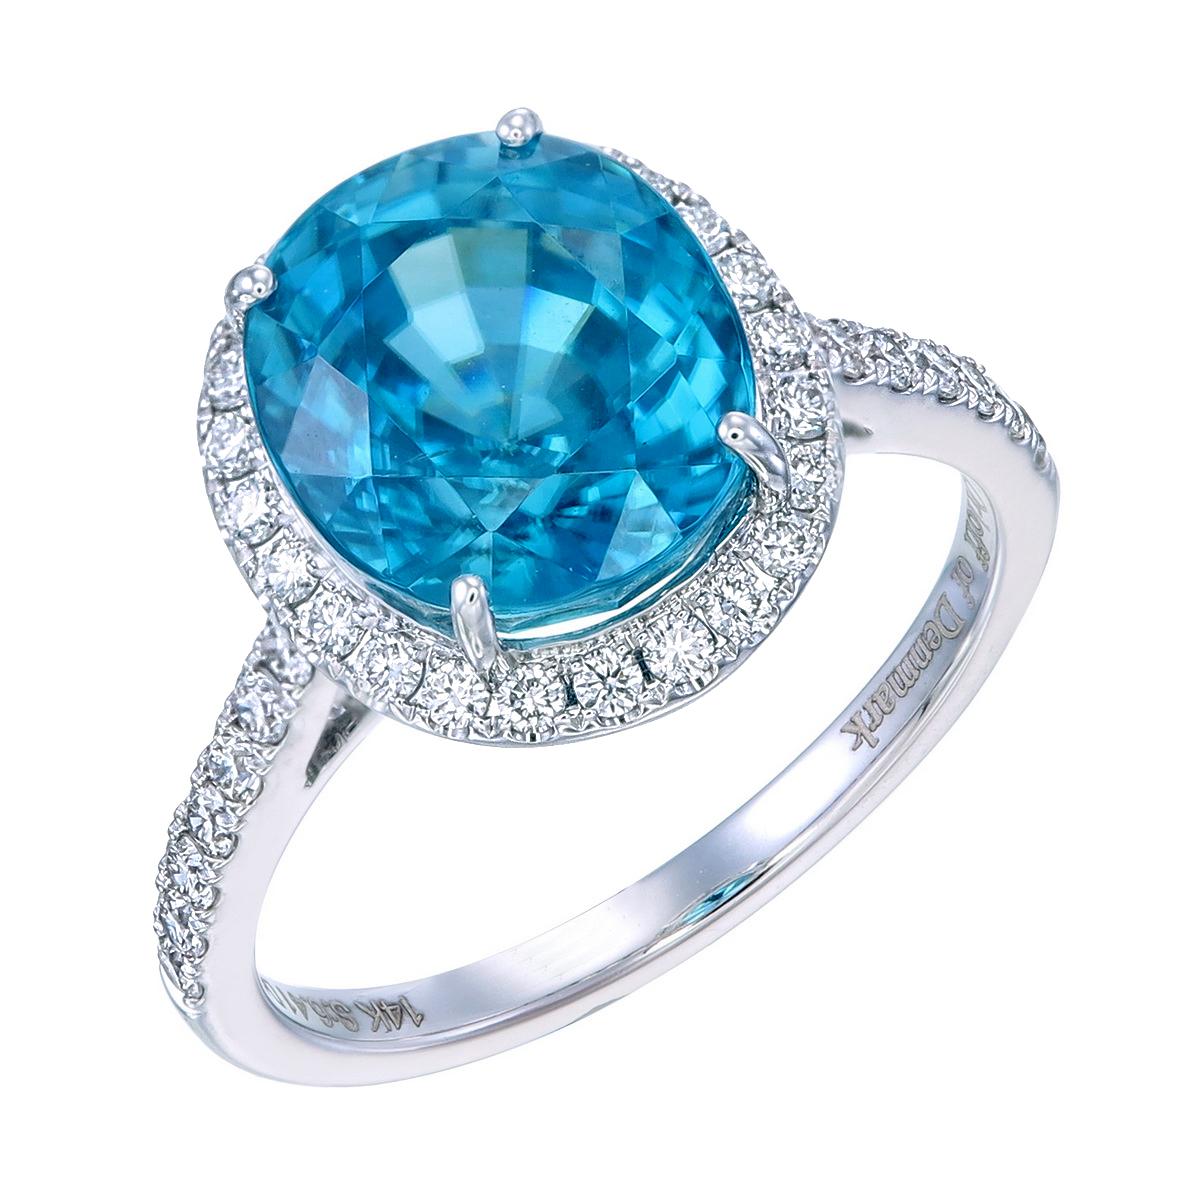 Orloff of Denmark, 6.41 ct Blue Zircon Diamond Engagement Ring in 14K White Gold